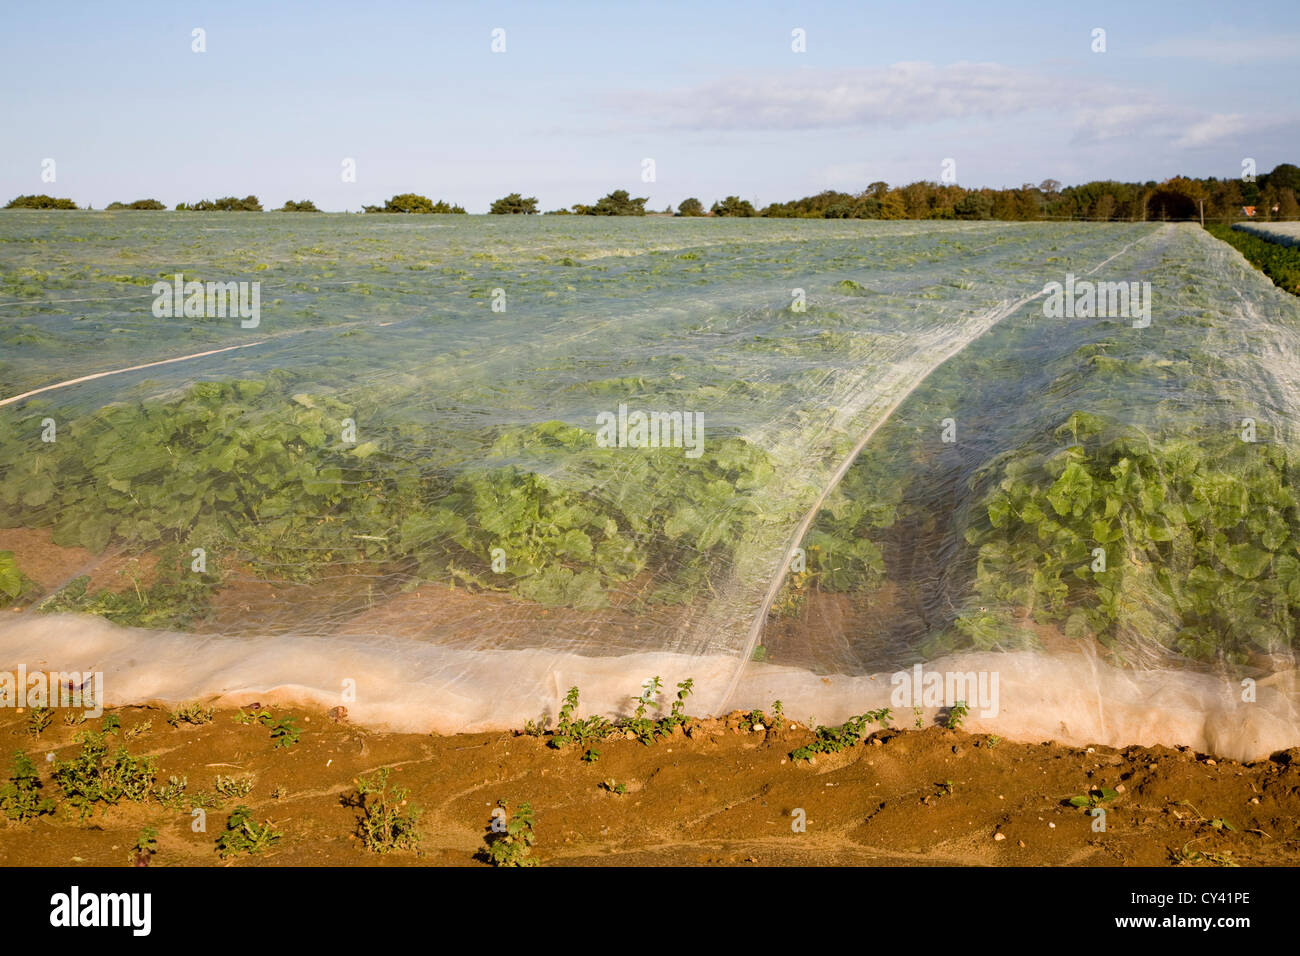 Turnip crop growing in field under protective sheeting Alderton, Suffolk, England Stock Photo